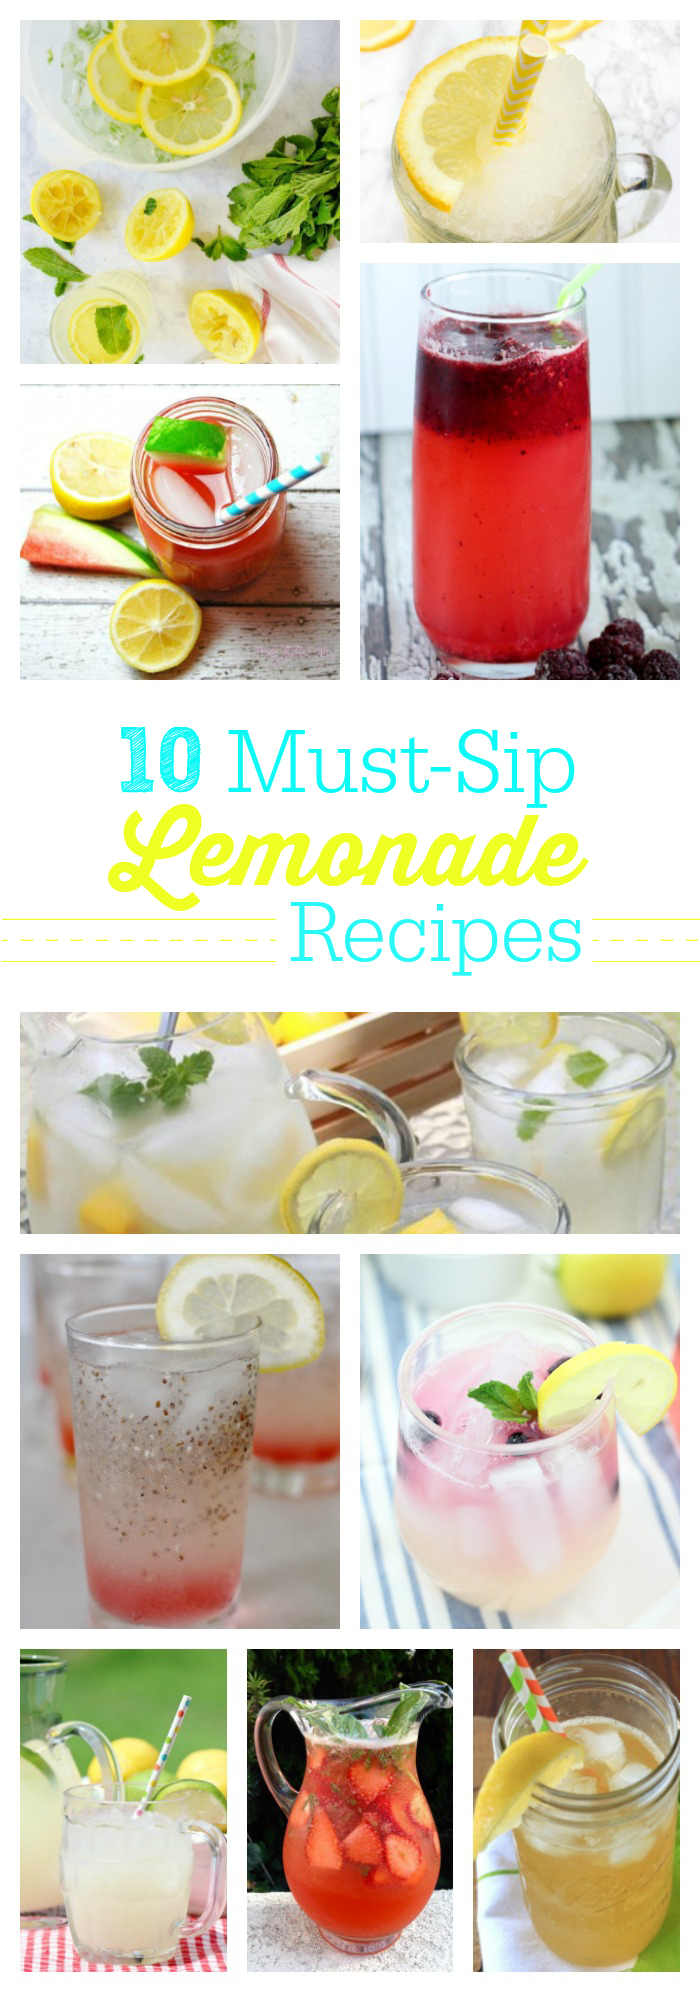 refresh yo self with these 10 tasty lemonade recipes